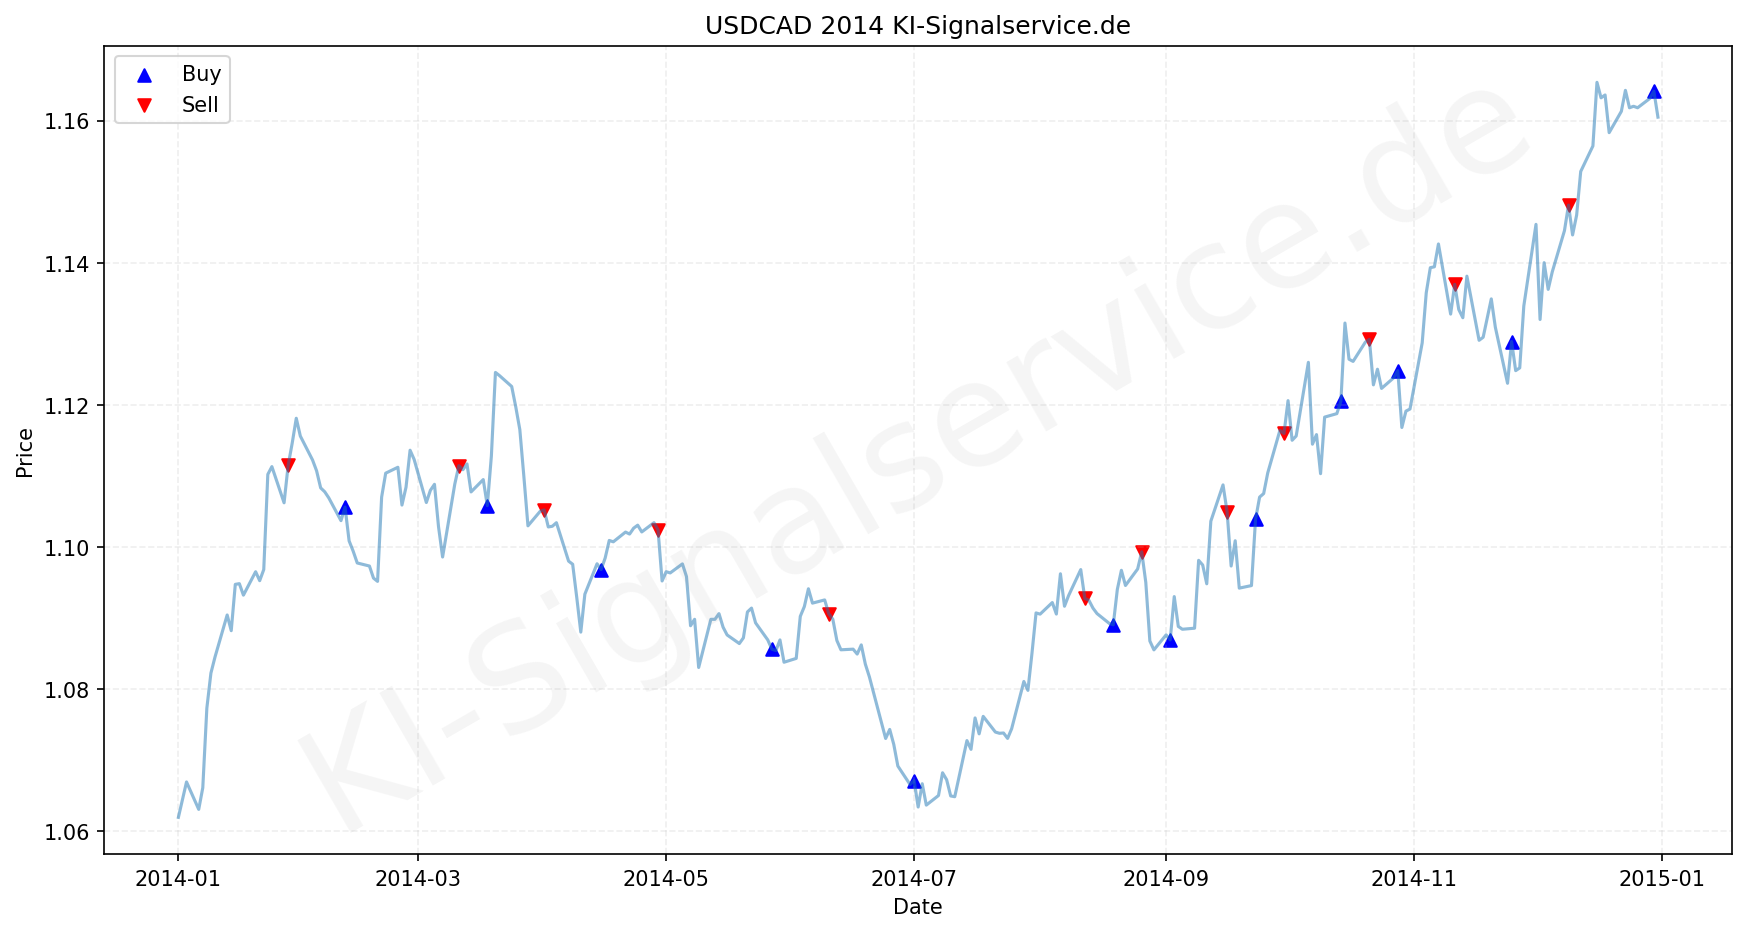 USDCAD Chart - KI Tradingsignale 2014